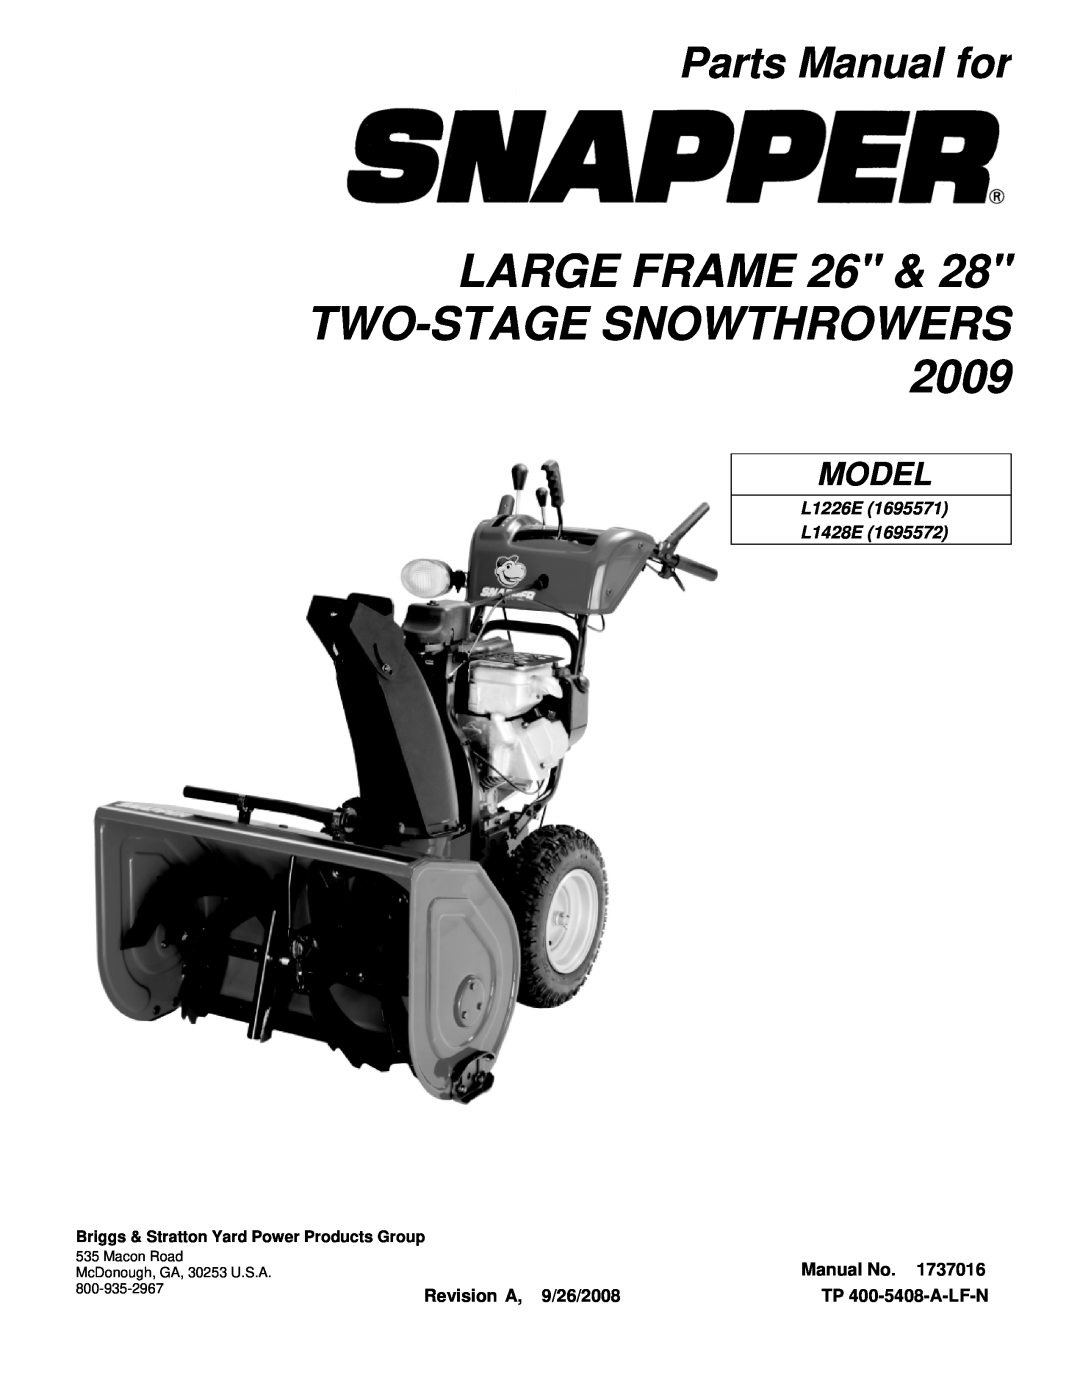 Snapper L1226E, L1428E manual LARGE FRAME 26 & TWO-STAGESNOWTHROWERS, Parts Manual for, Model, L1226E L1428E, Manual No 